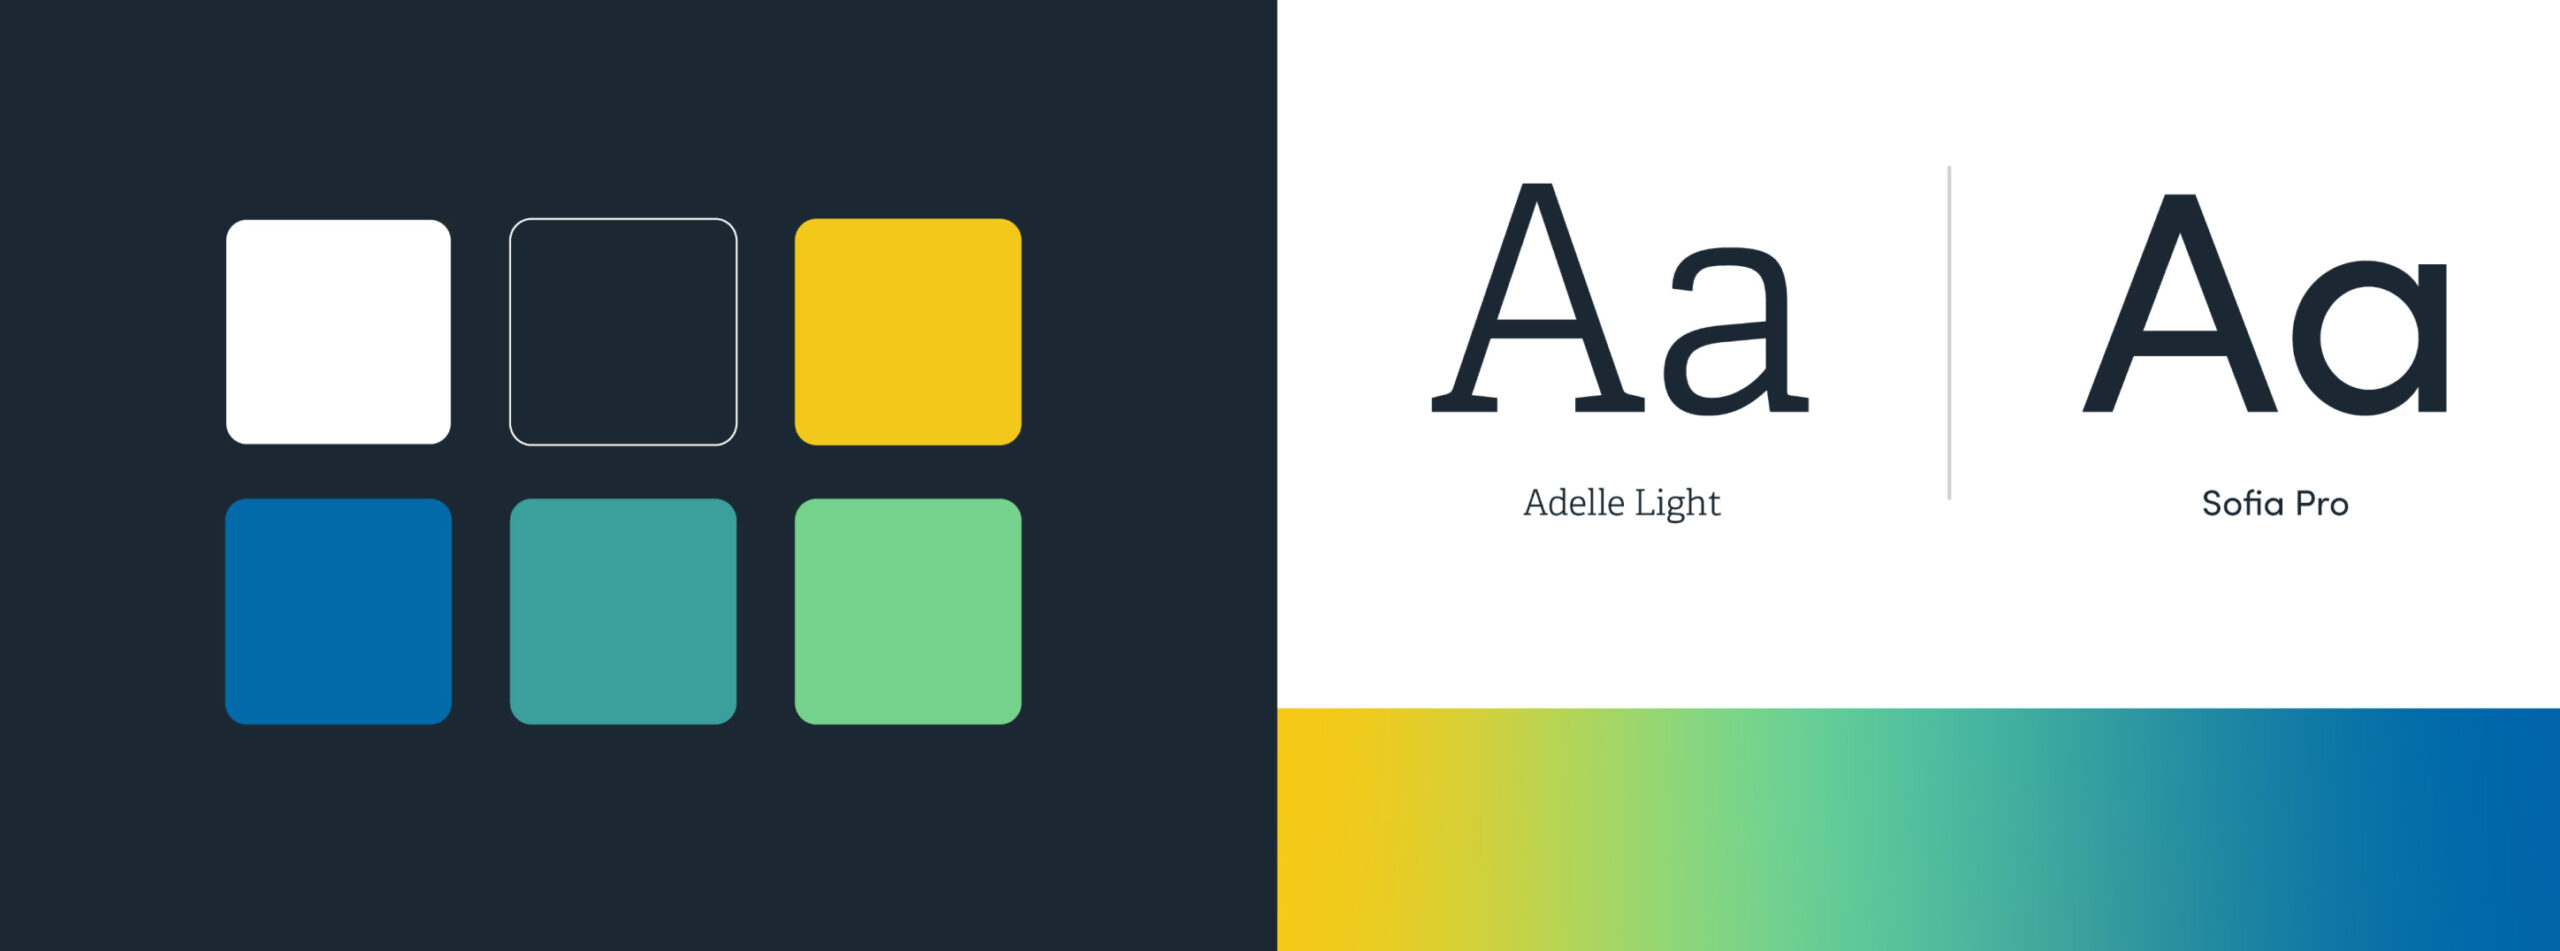 Nimble branding colors and fonts